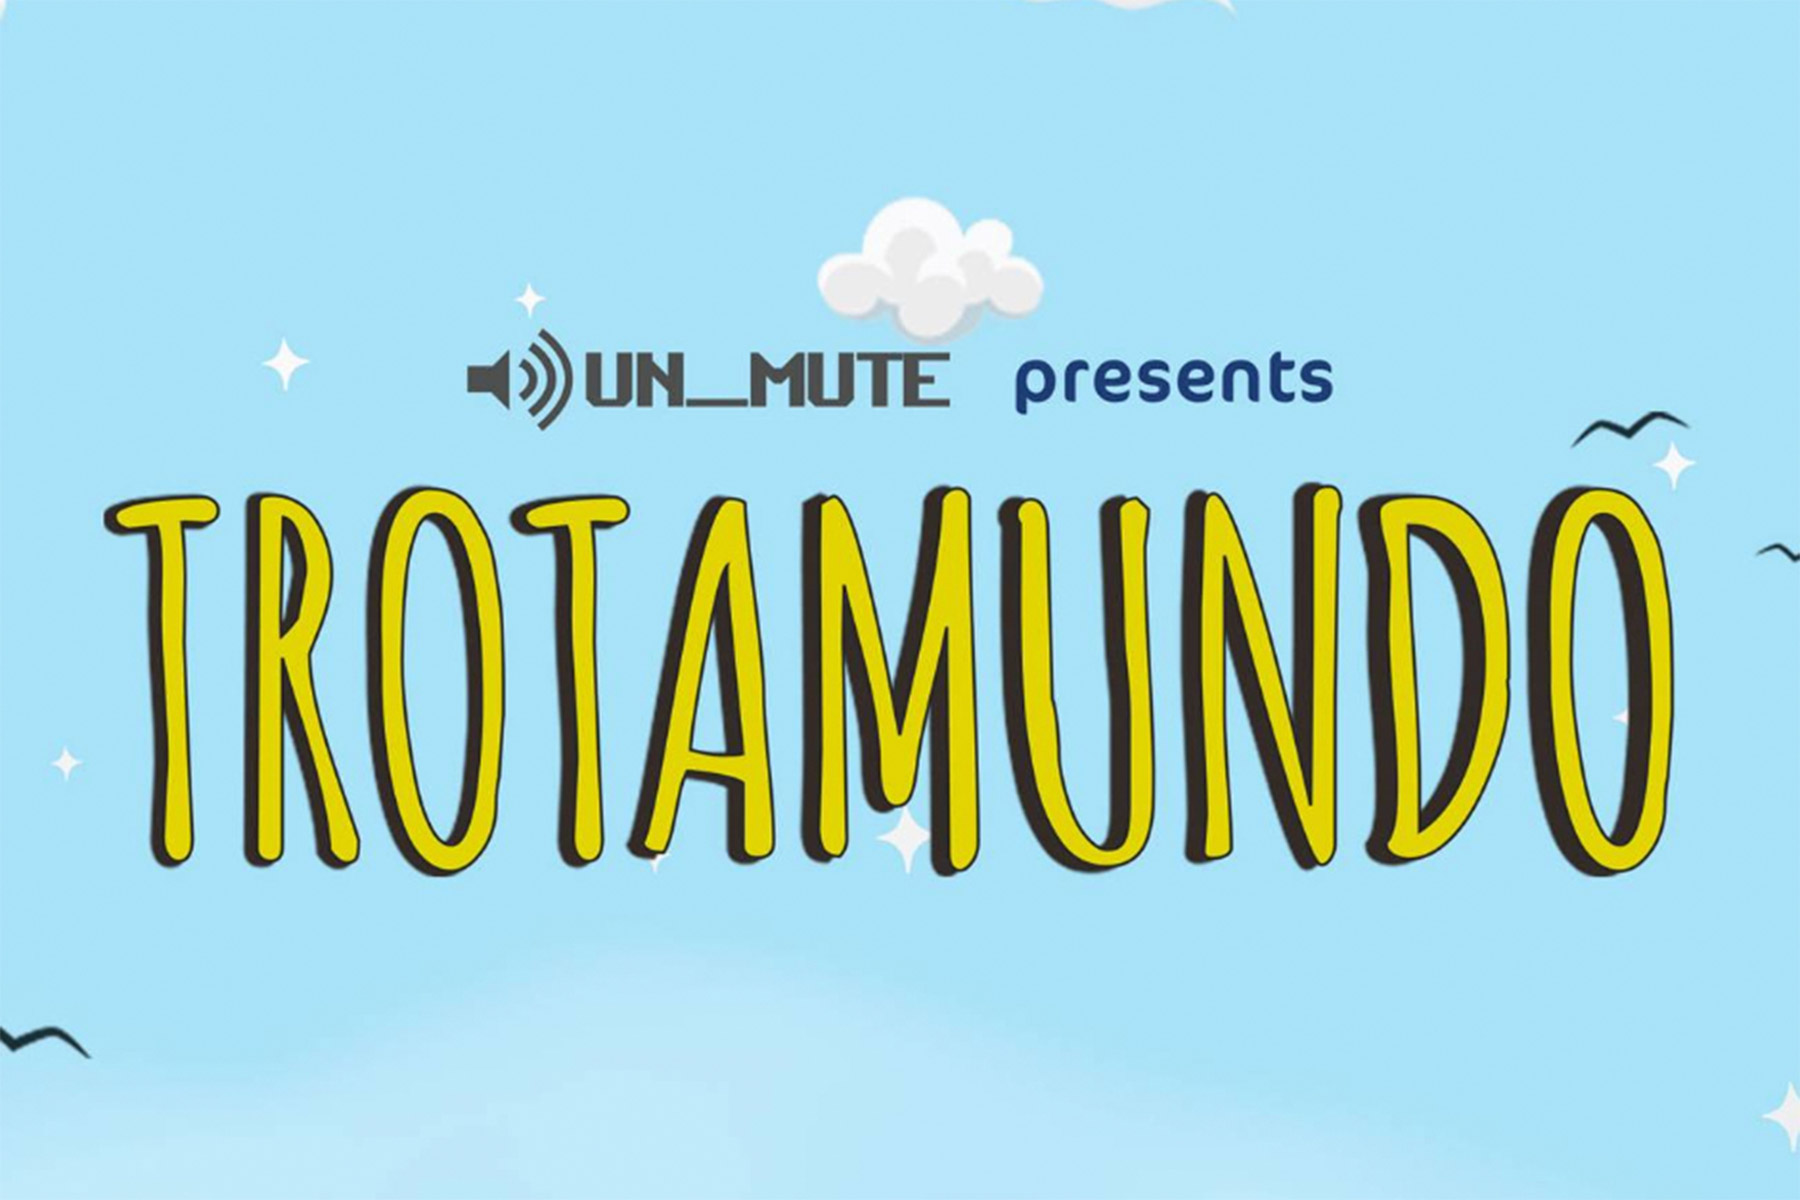 UN_MUTE presents Trotamundo with over 60 artists in Ecuador